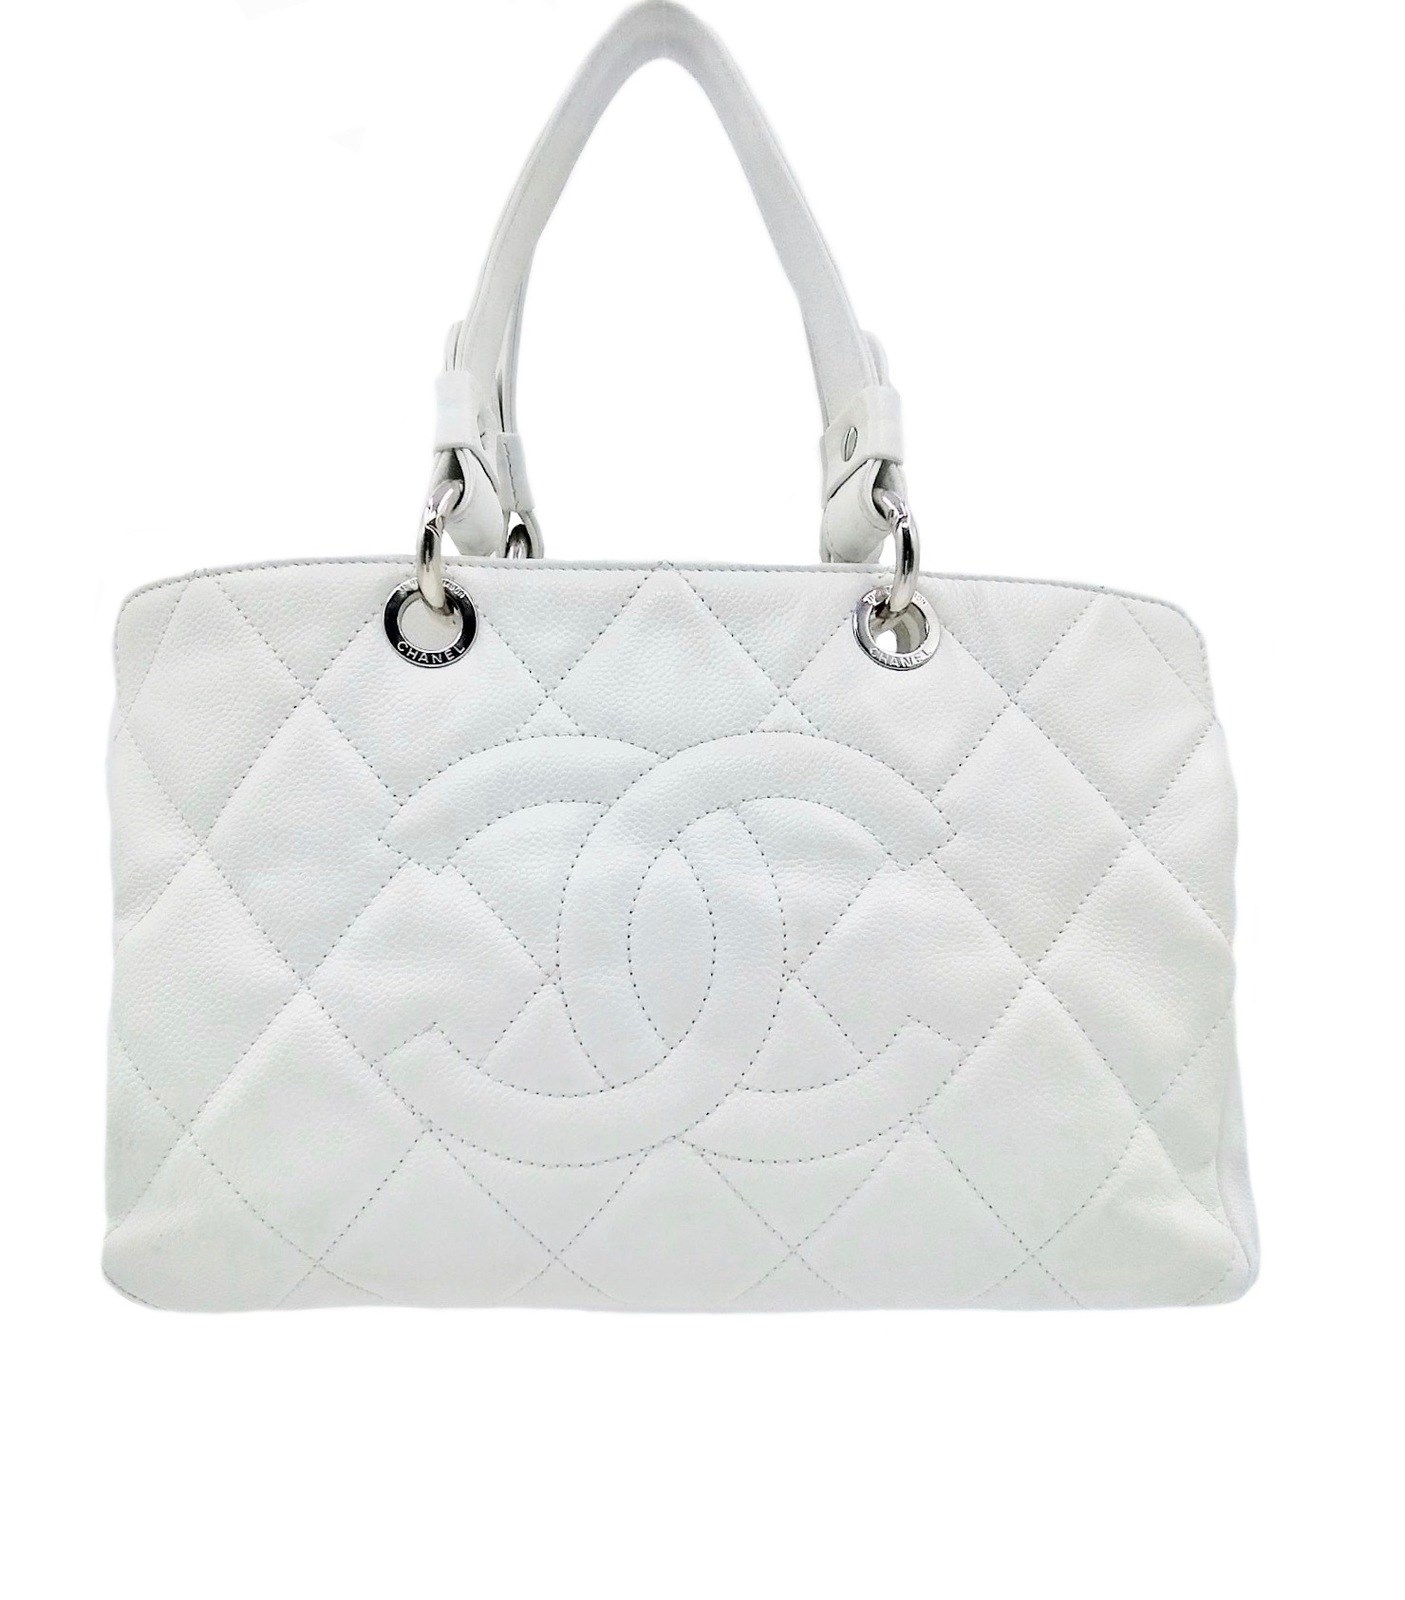 Caviar white leather bag. (Chanel )